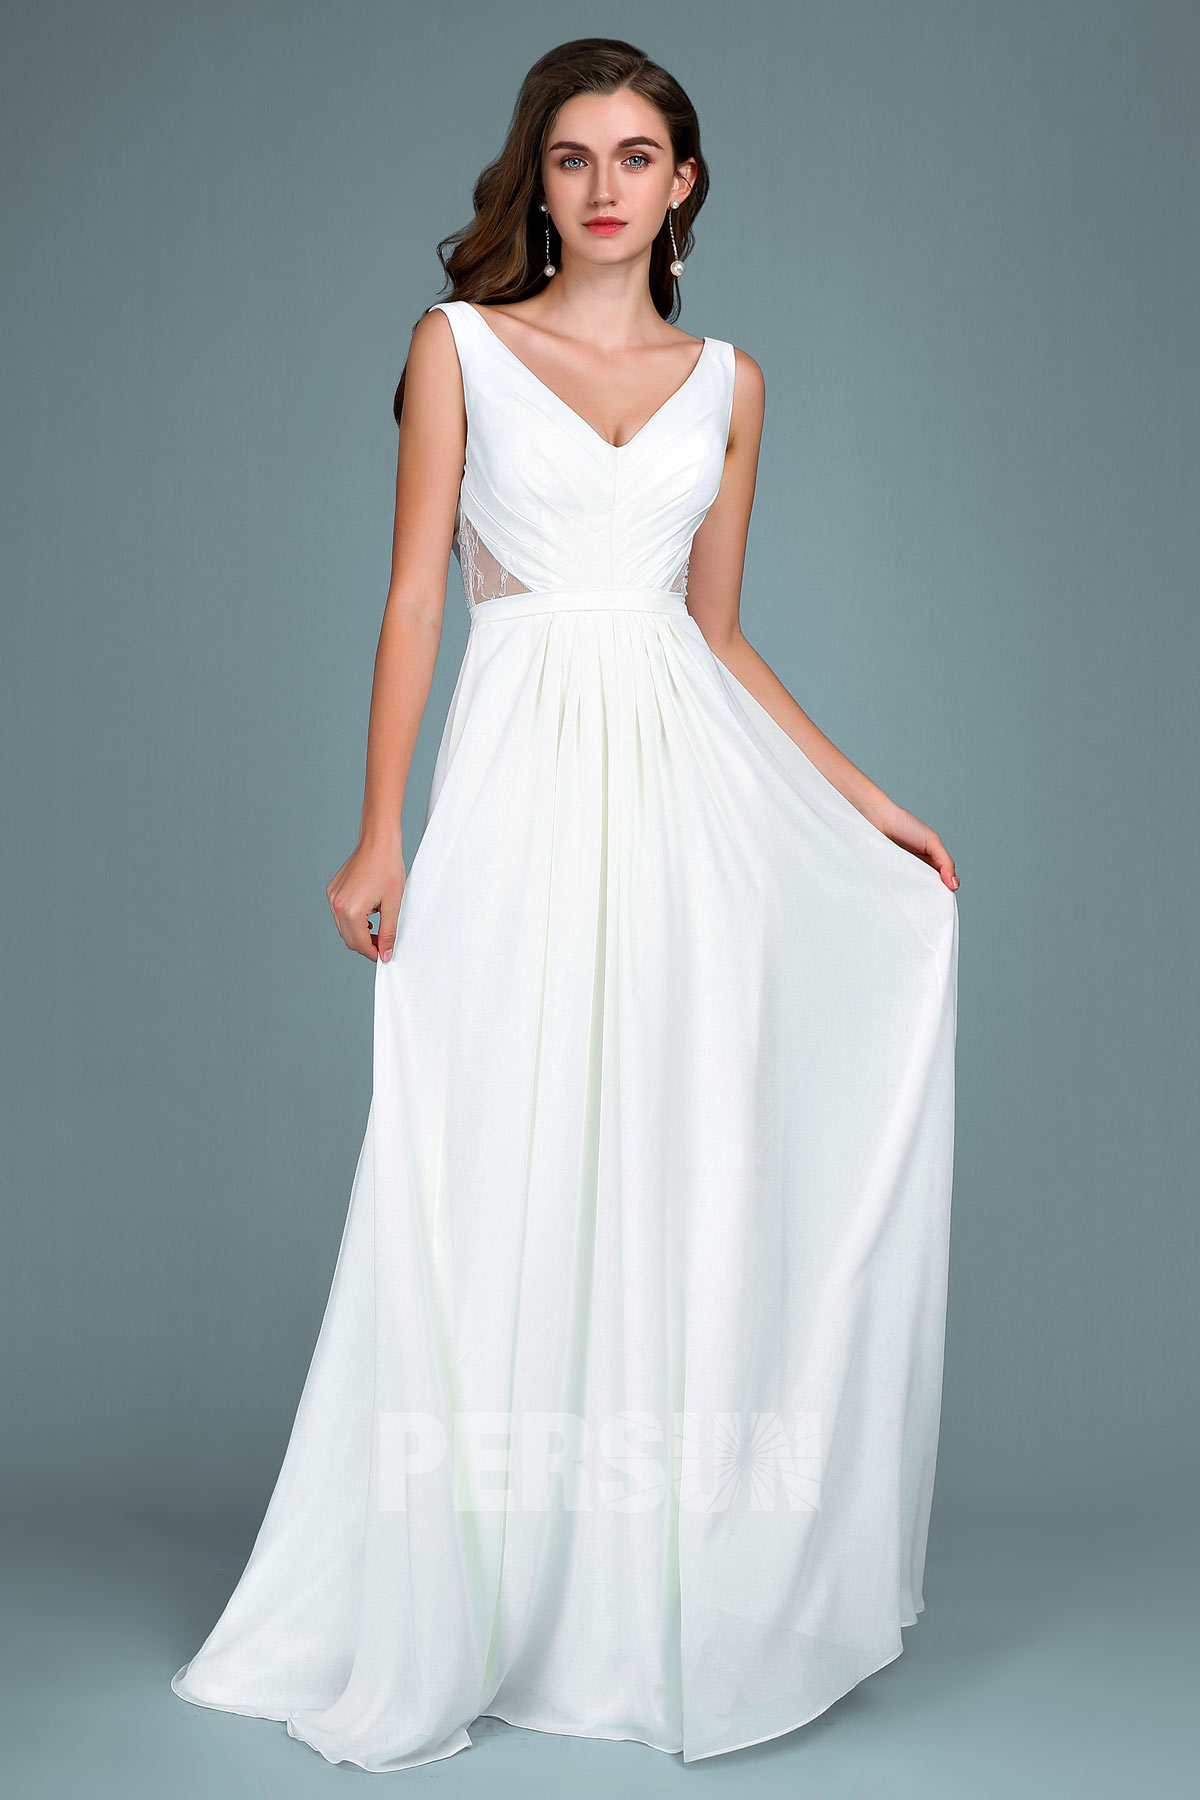 robe-de-cortege-blanc-casse-col-v-taille-transparente.jpg?profile=RESIZE_584x